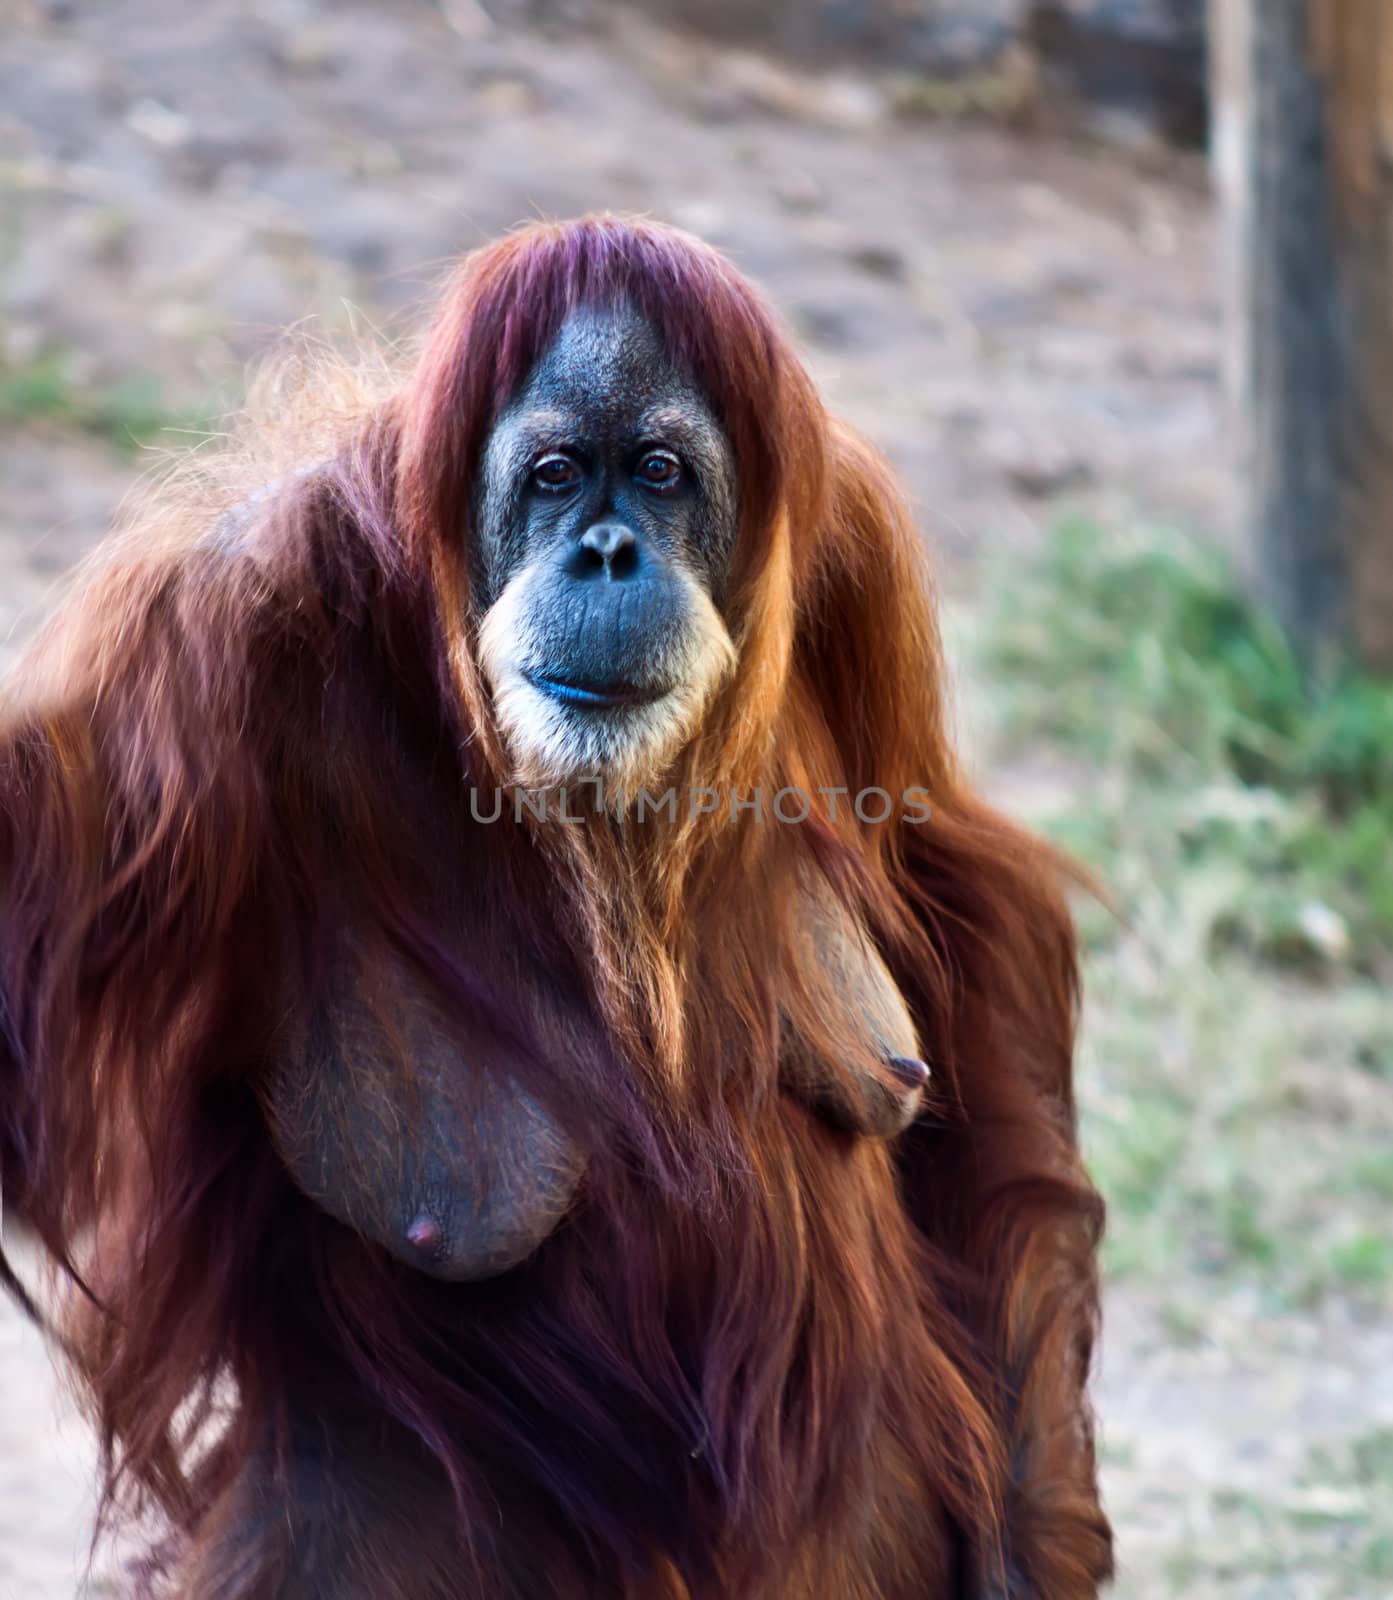 Portrait of an adult female orangutan standing on its hind legs.